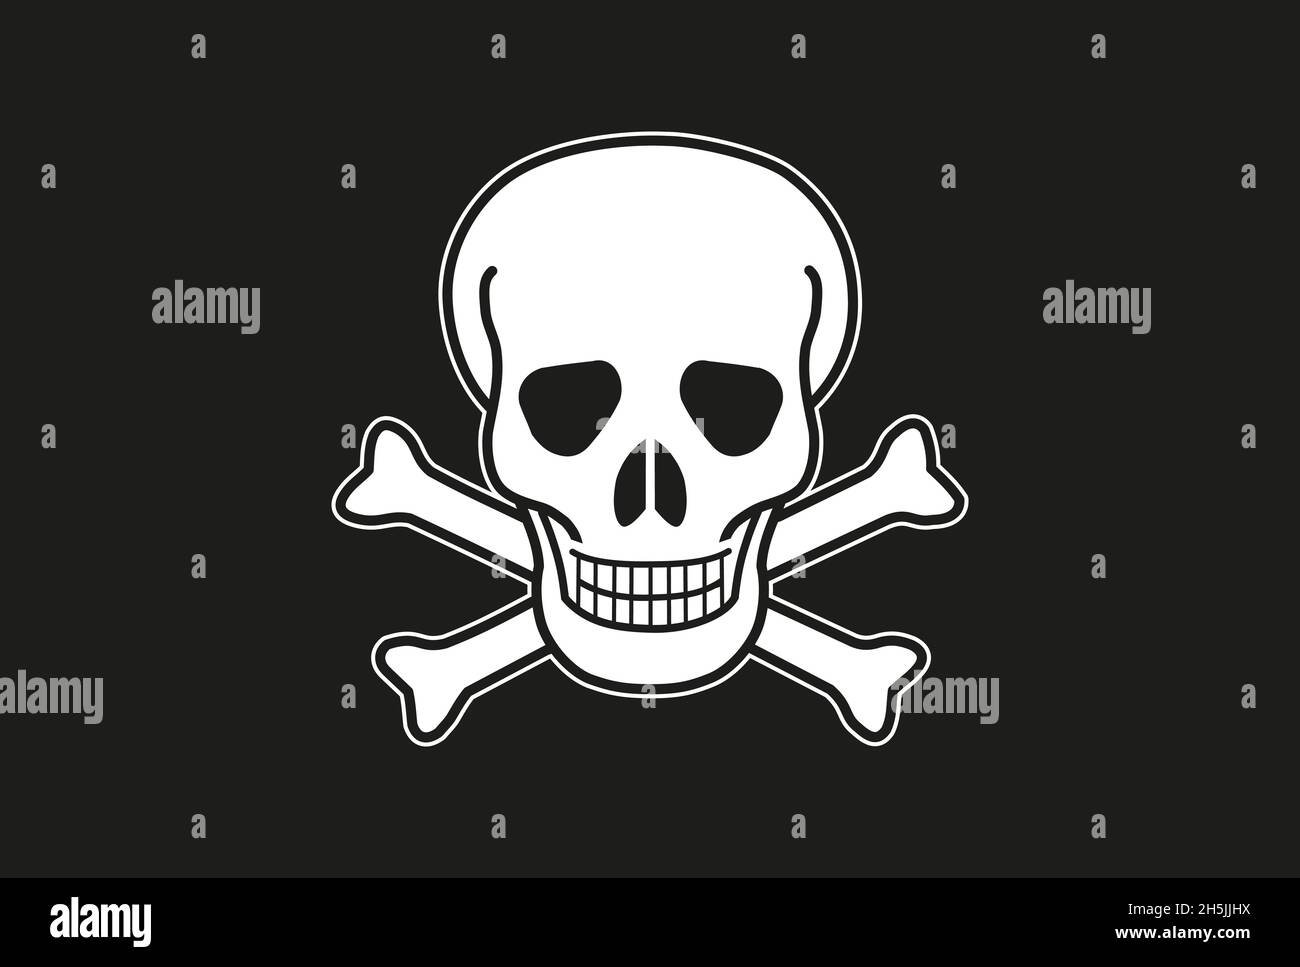 Jolly Roger Pirate flag, vector illustration Stock Vector